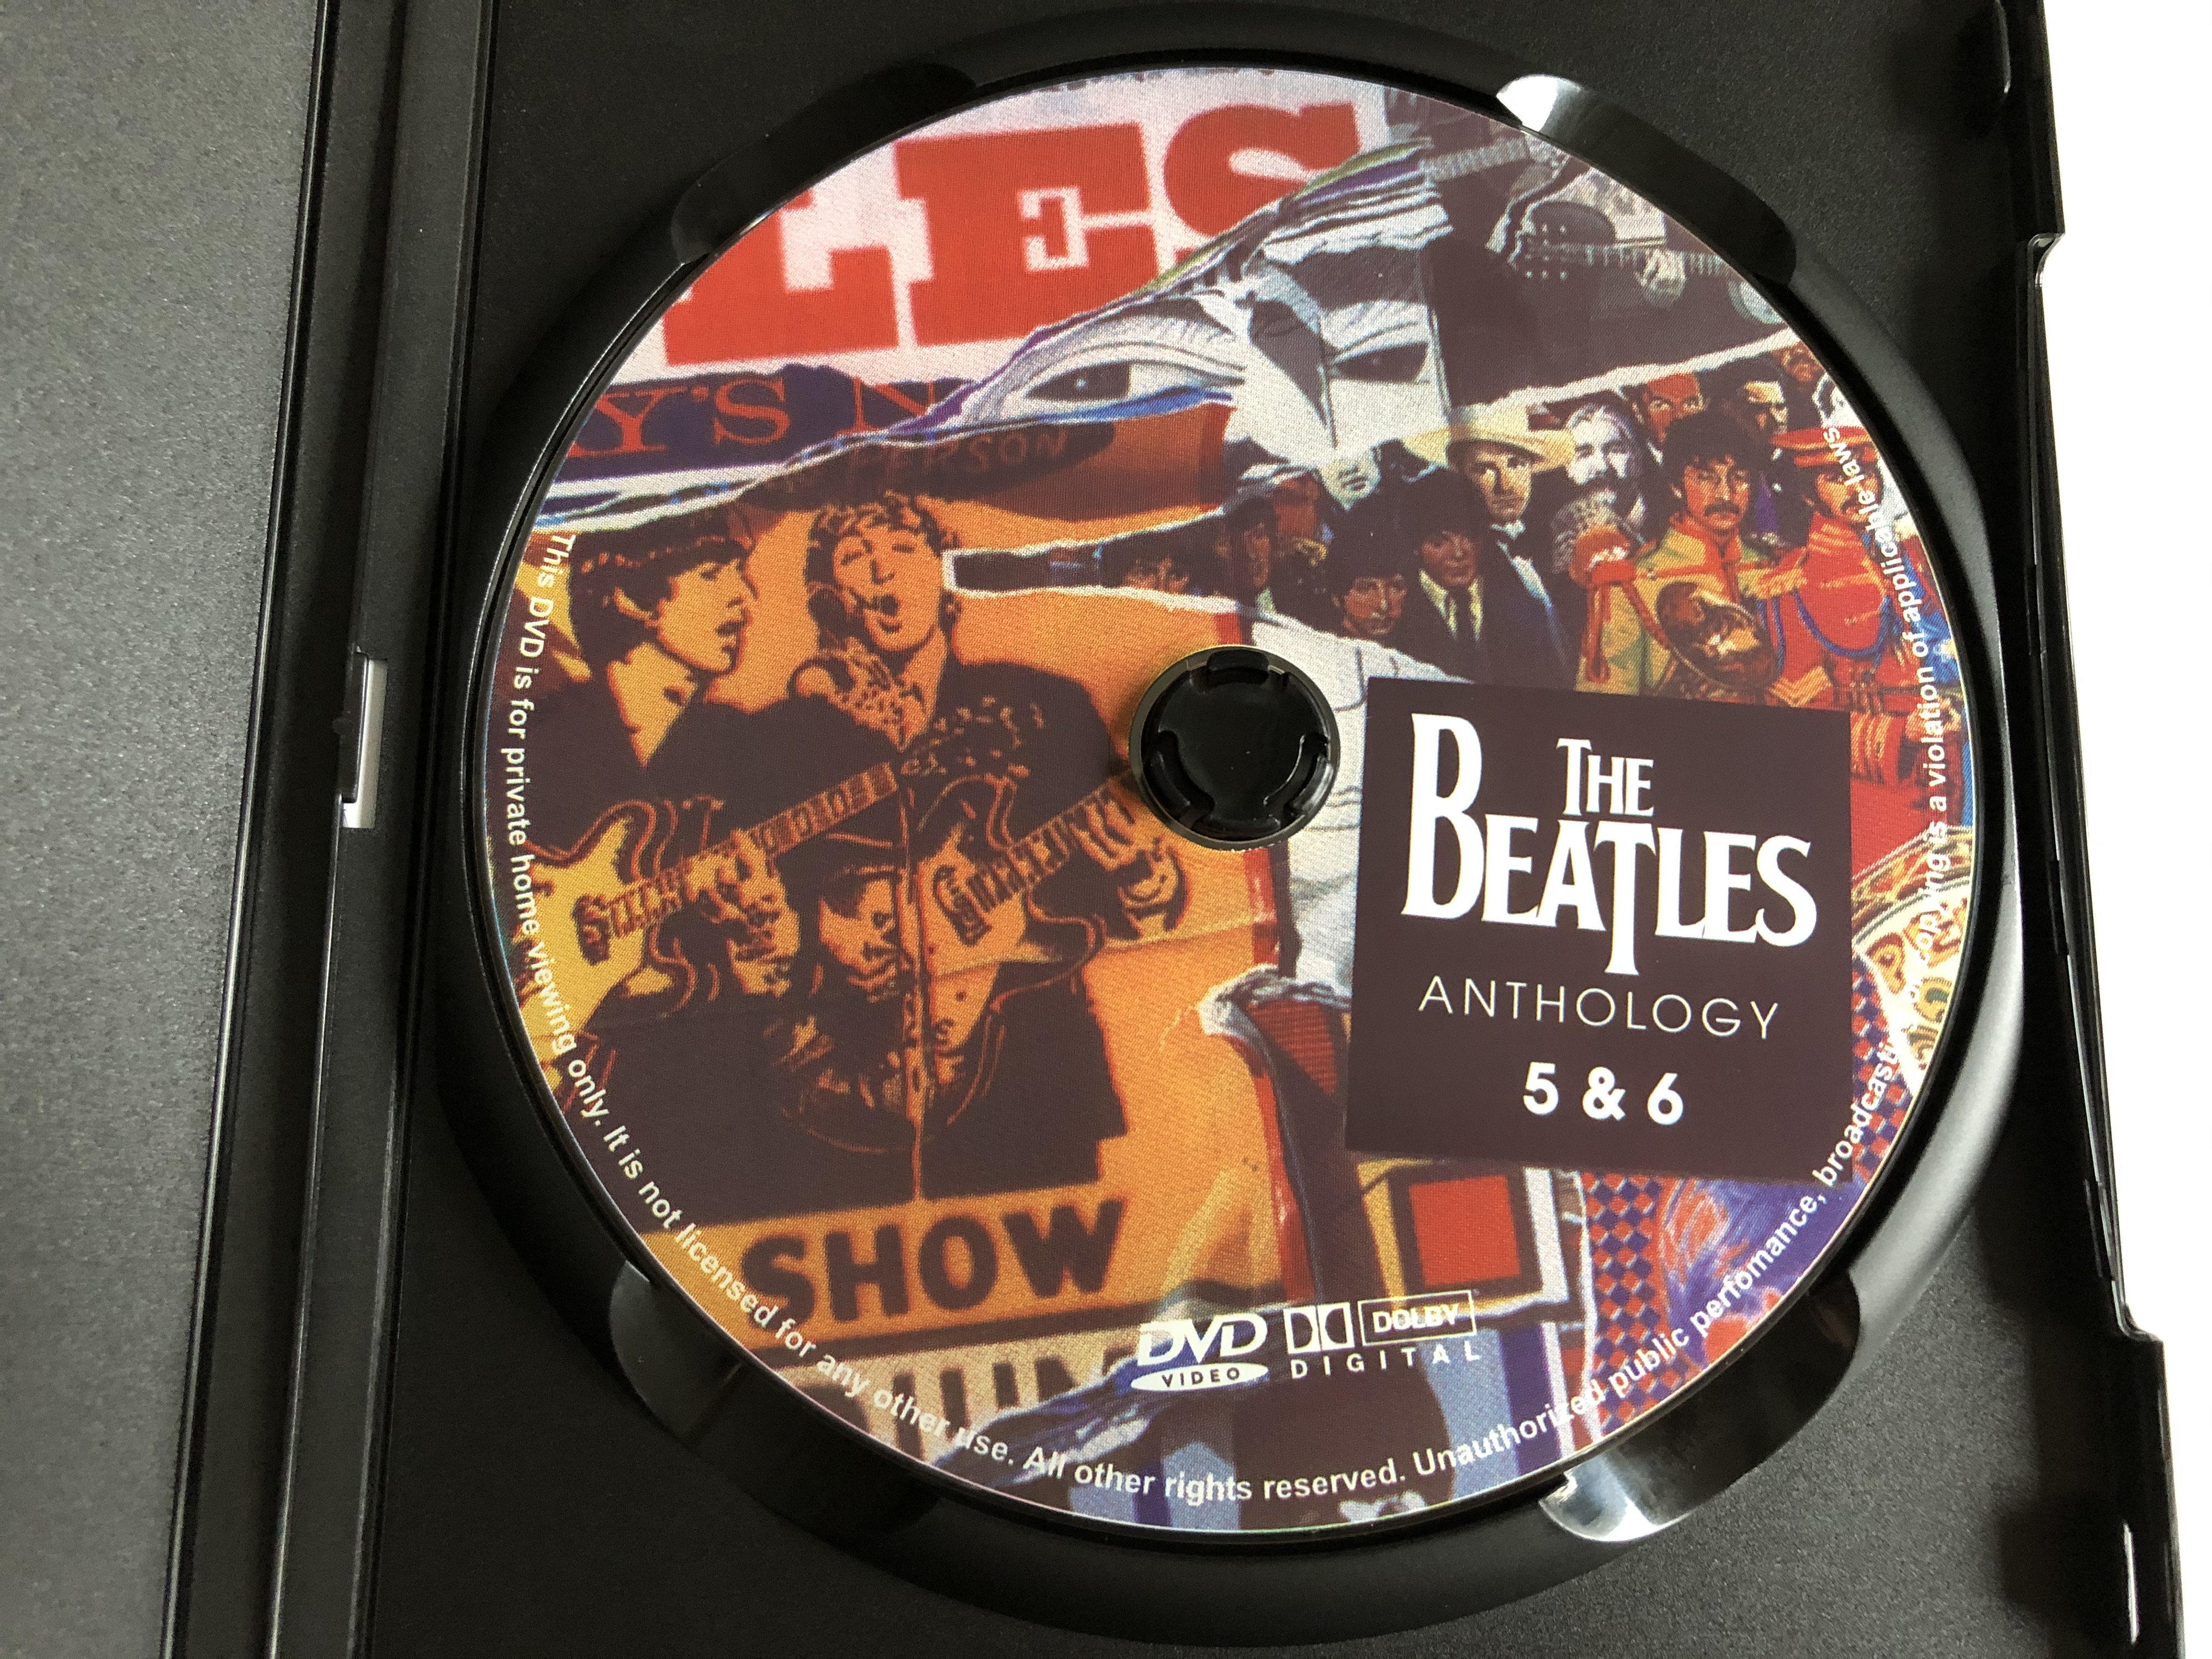 The Beatles Anthology 5 & 6 DVD 2003 1.JPG